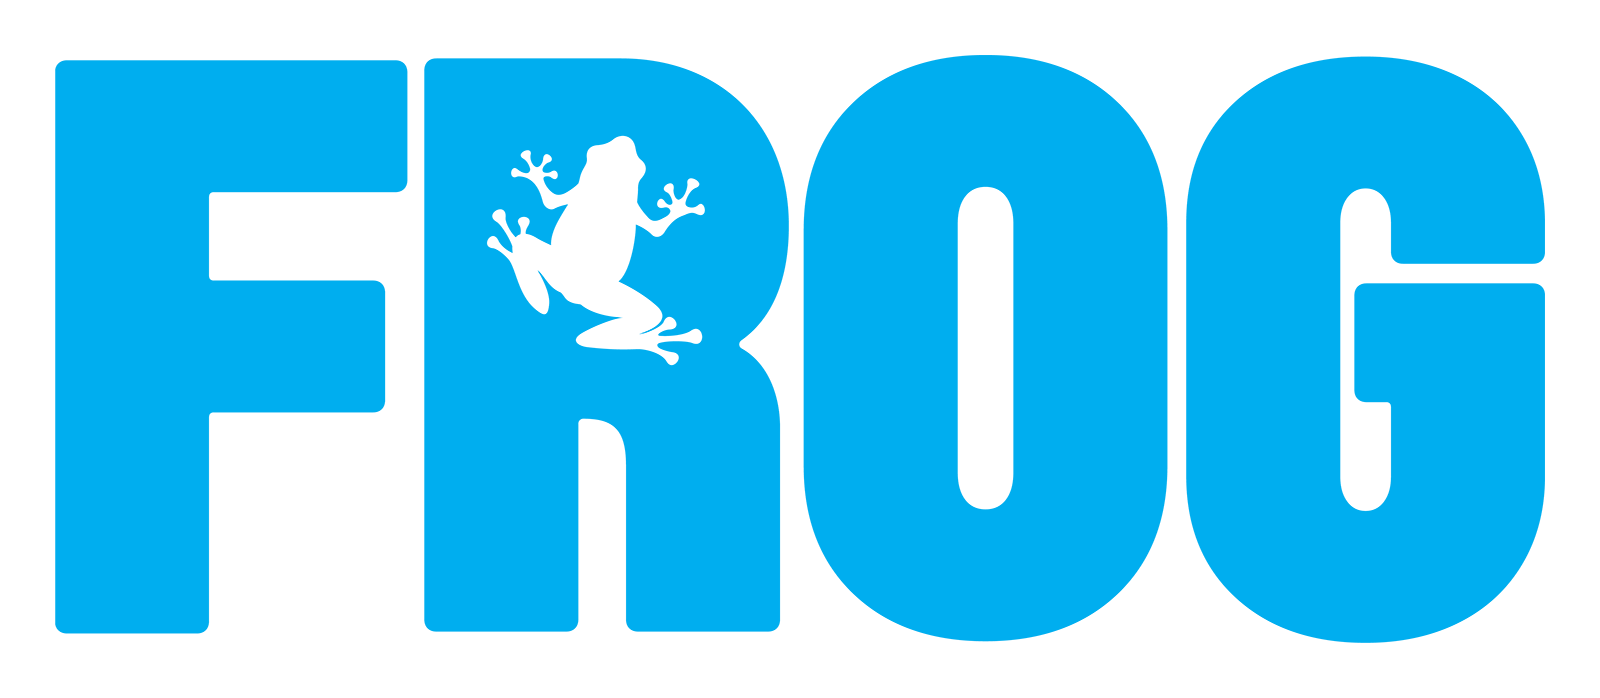 Frog Marketing